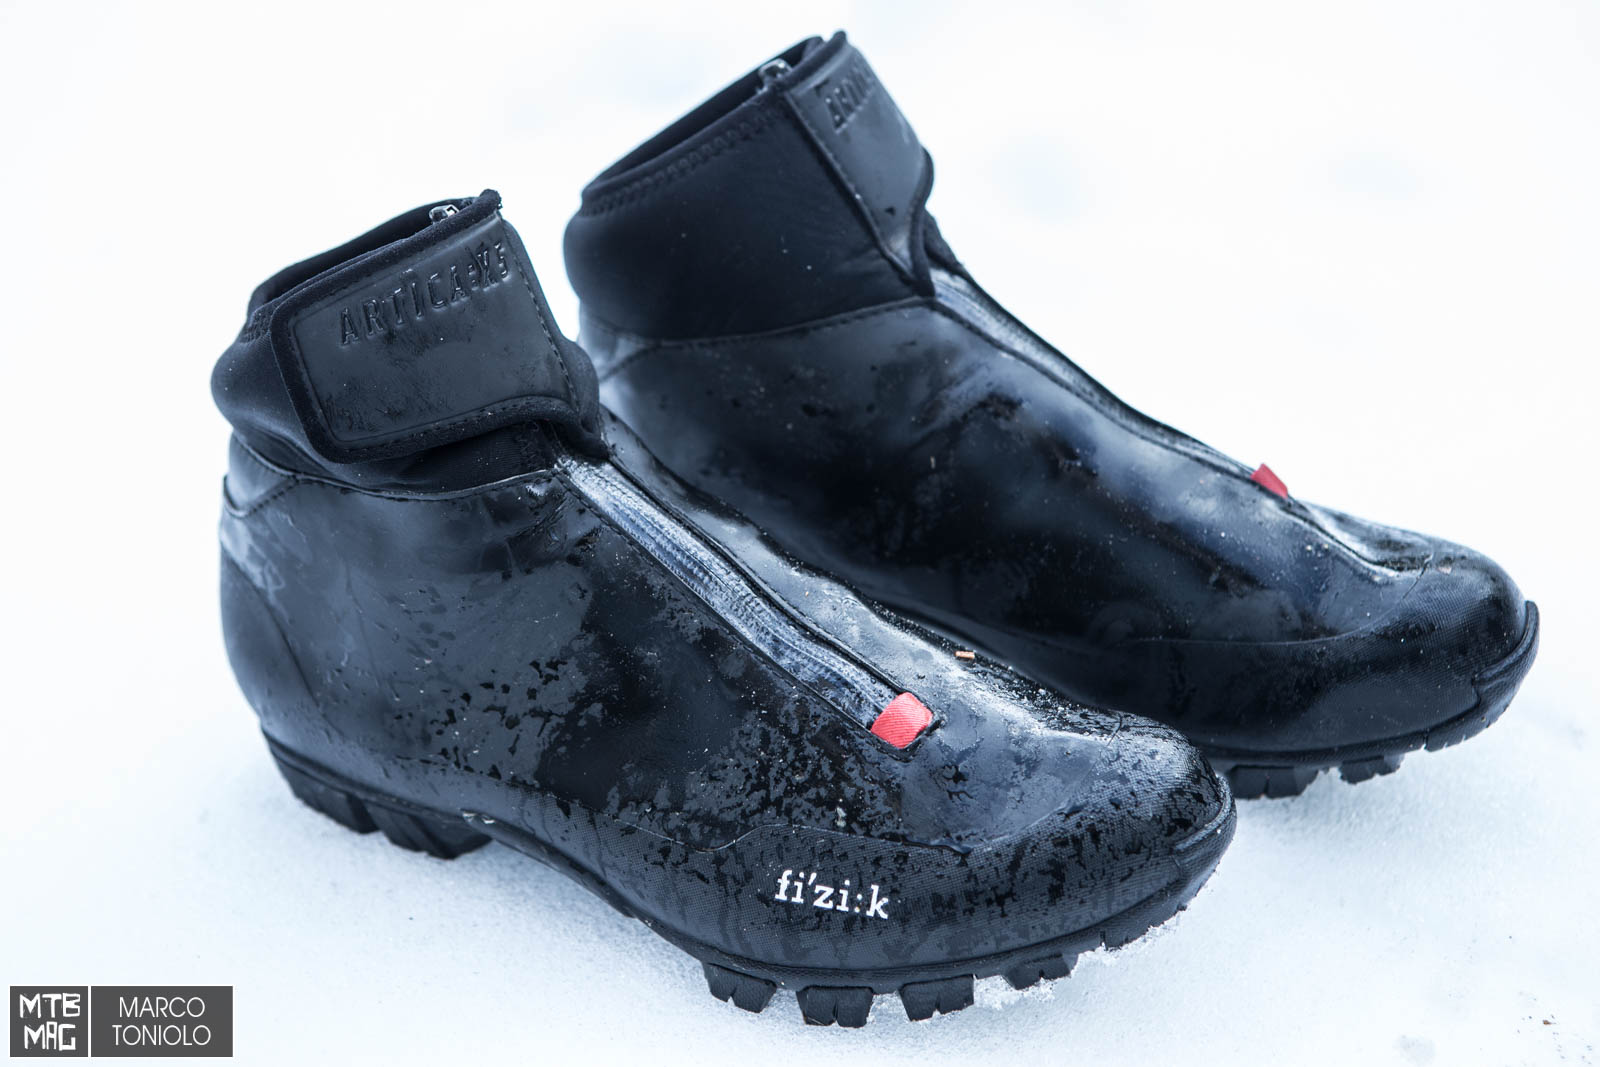 scarpe mtb fizik invernali